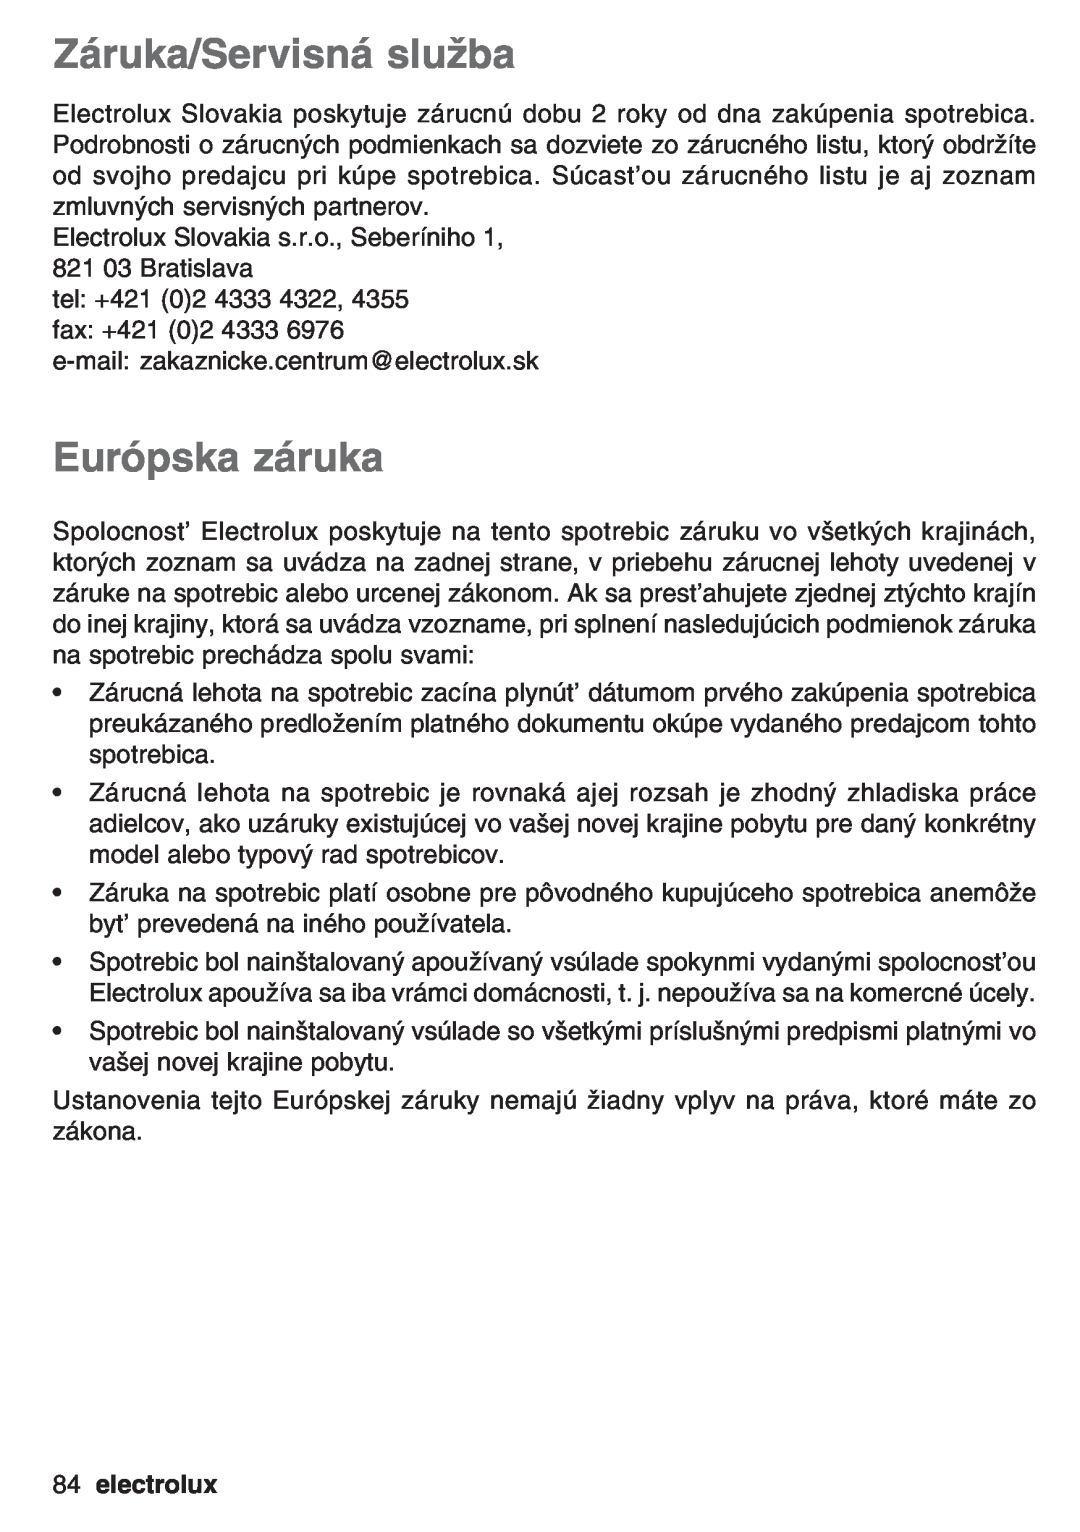 Electrolux EOB 53003 user manual Záruka/Servisná služba, Európska záruka, electrolux 